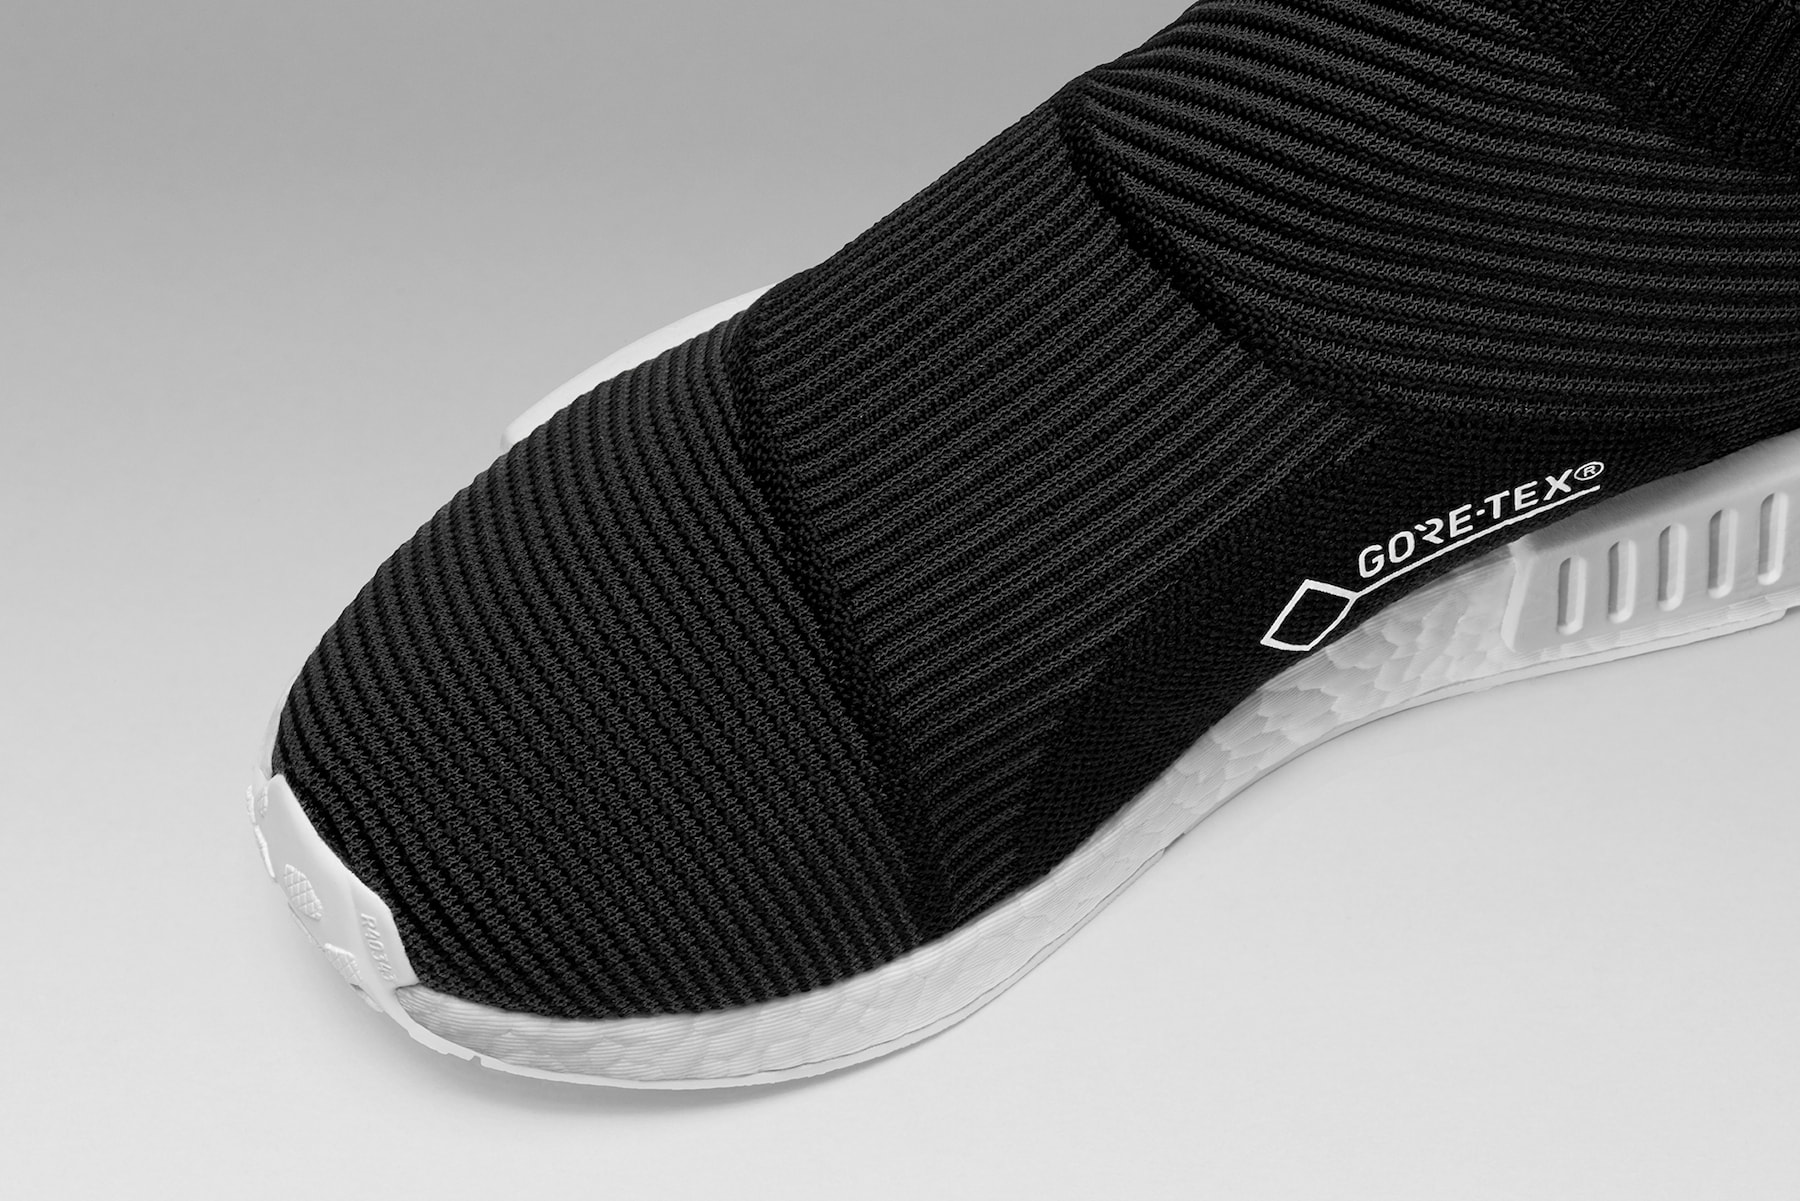 adidas Originals NMD CS1 GTX PK 防水鞋款即将上架